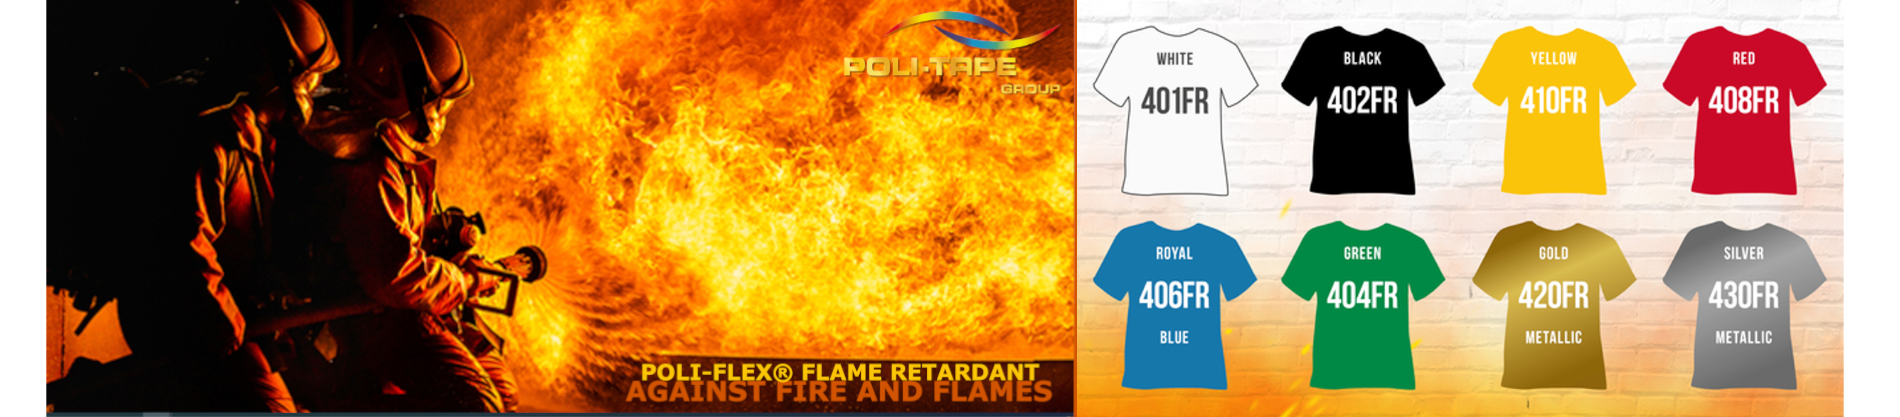 poli-flex flame